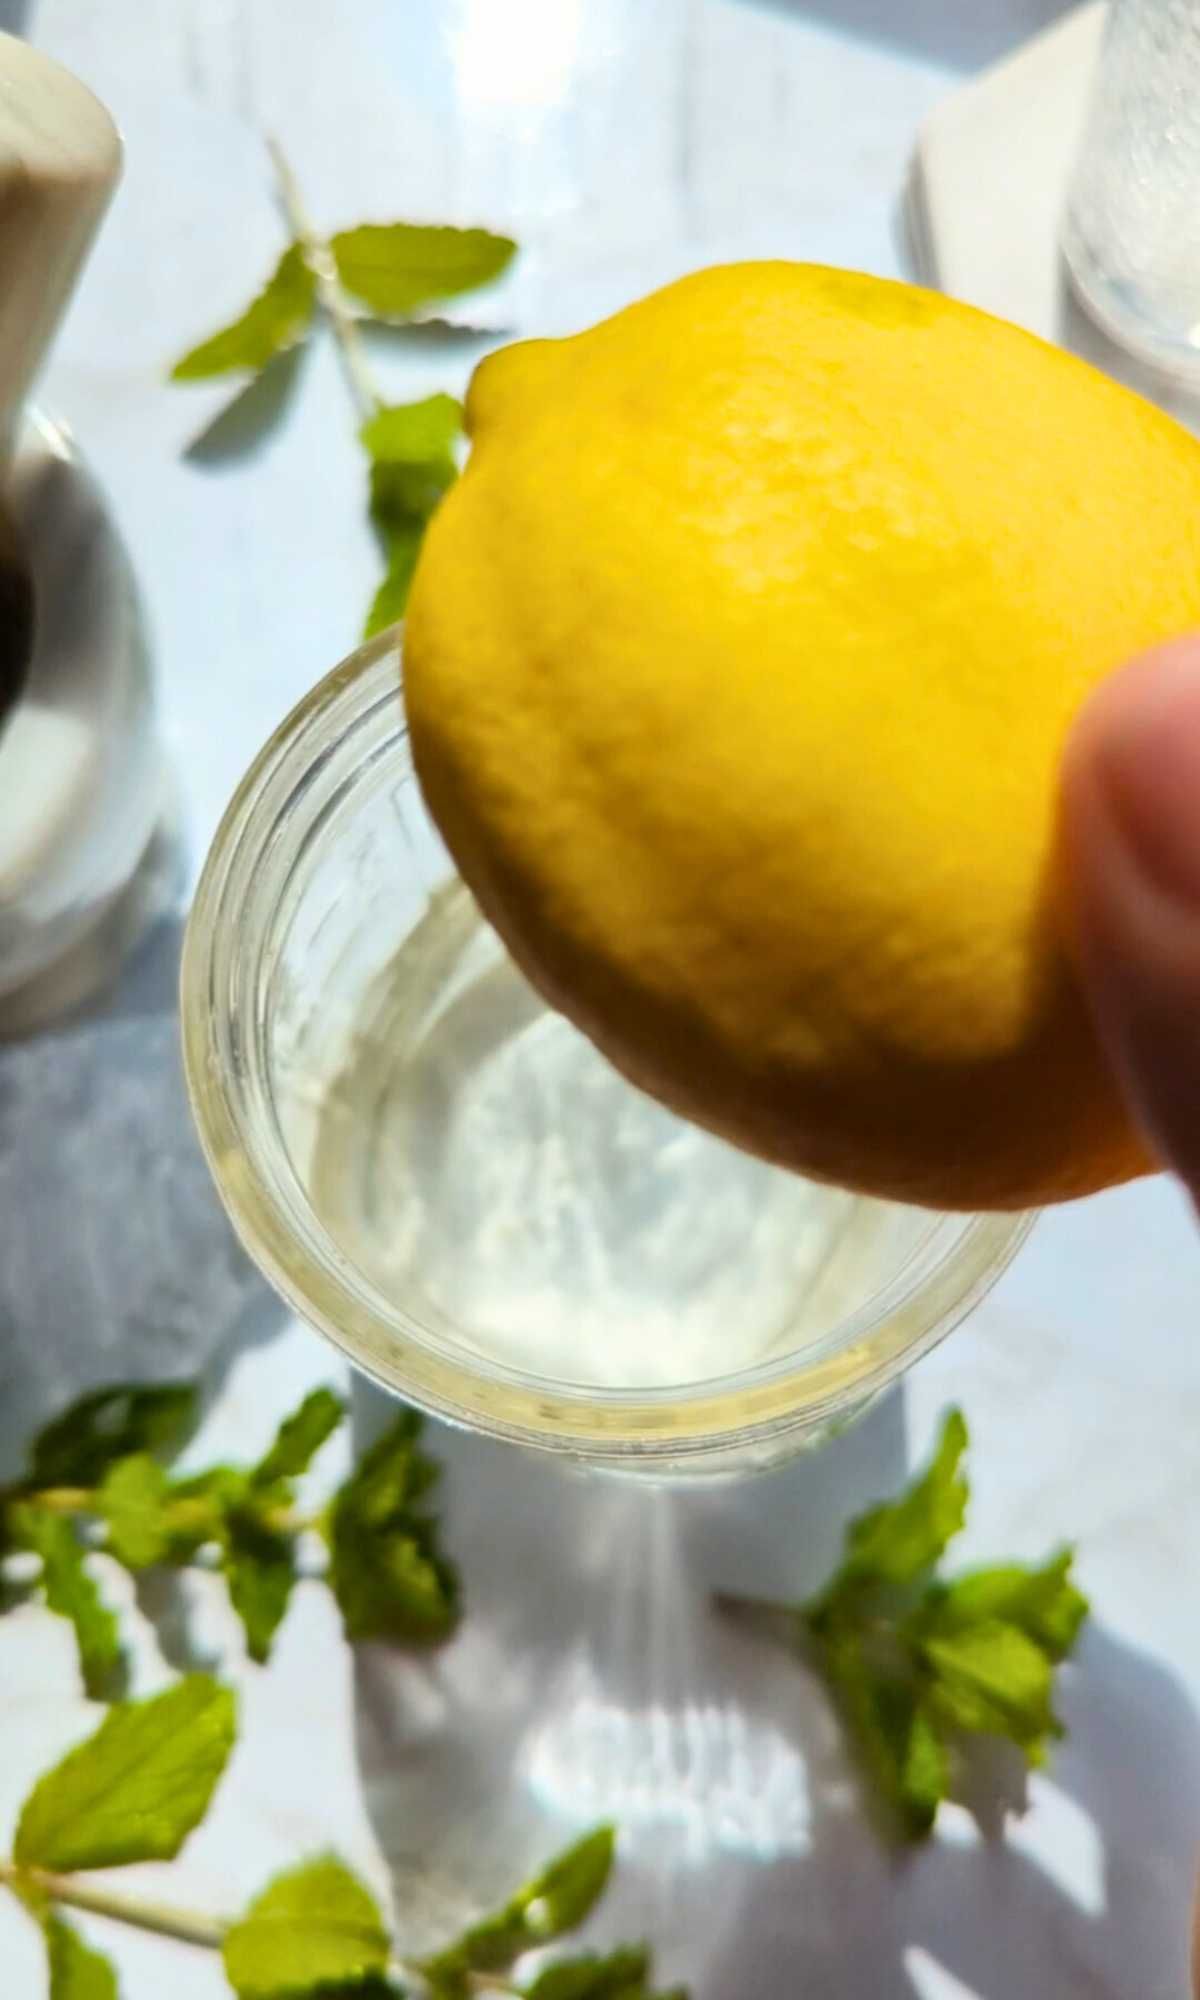 fresh lemons bring juiced into a mason jar to make homemade lemonade.